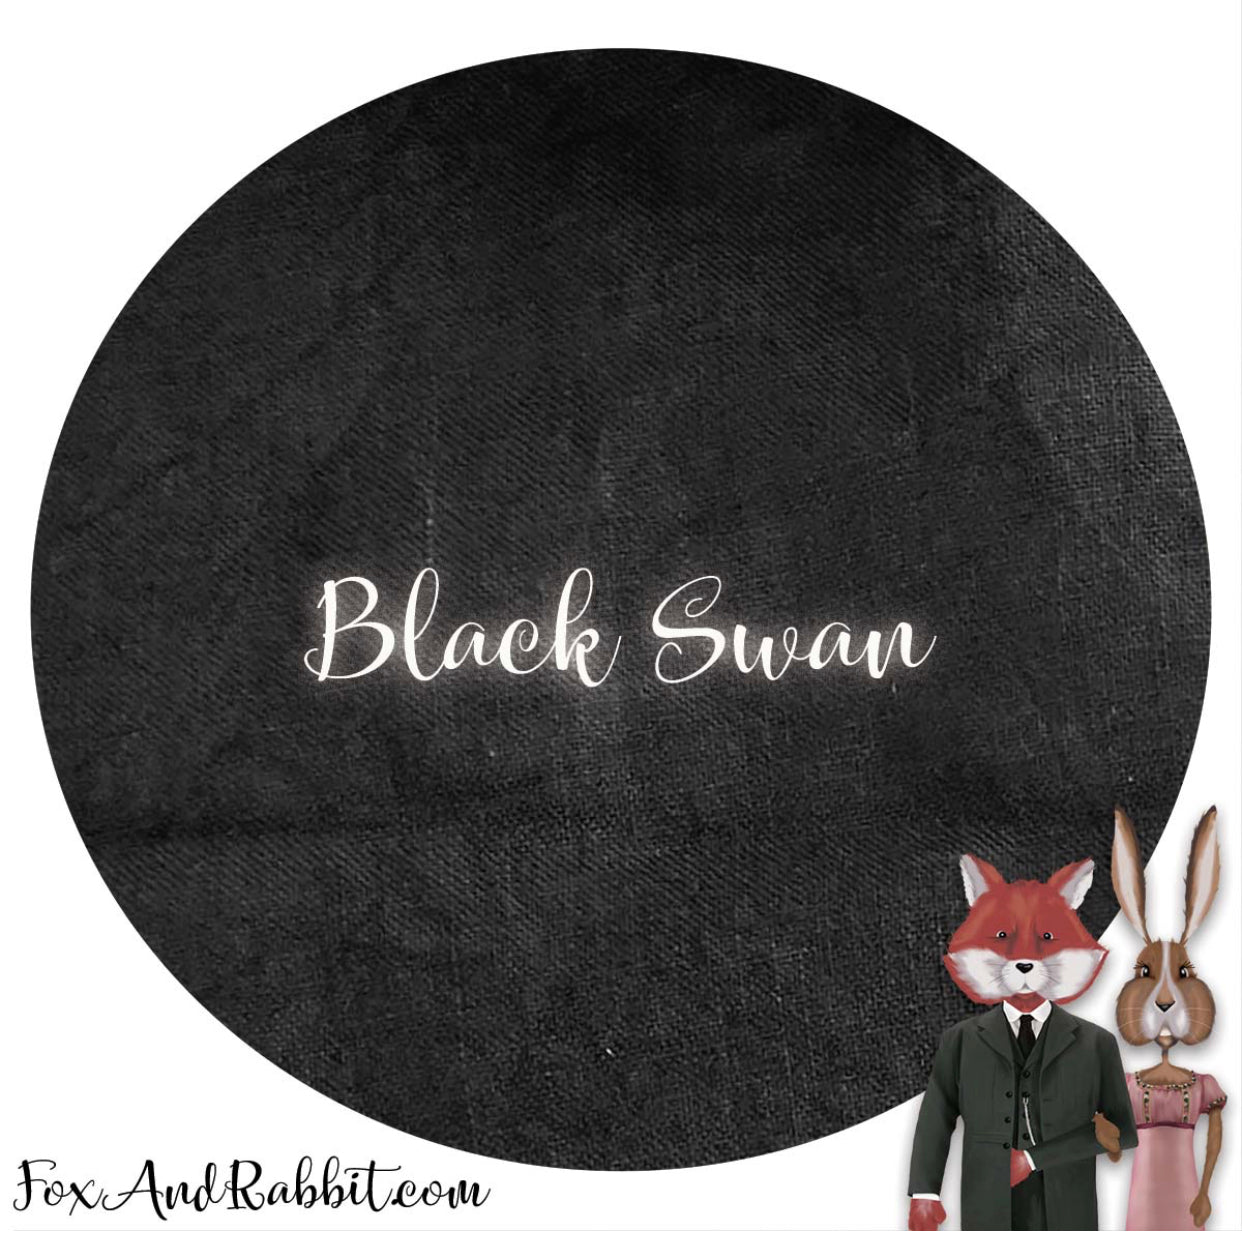 32 Count Black Swan Fox and Rabbit